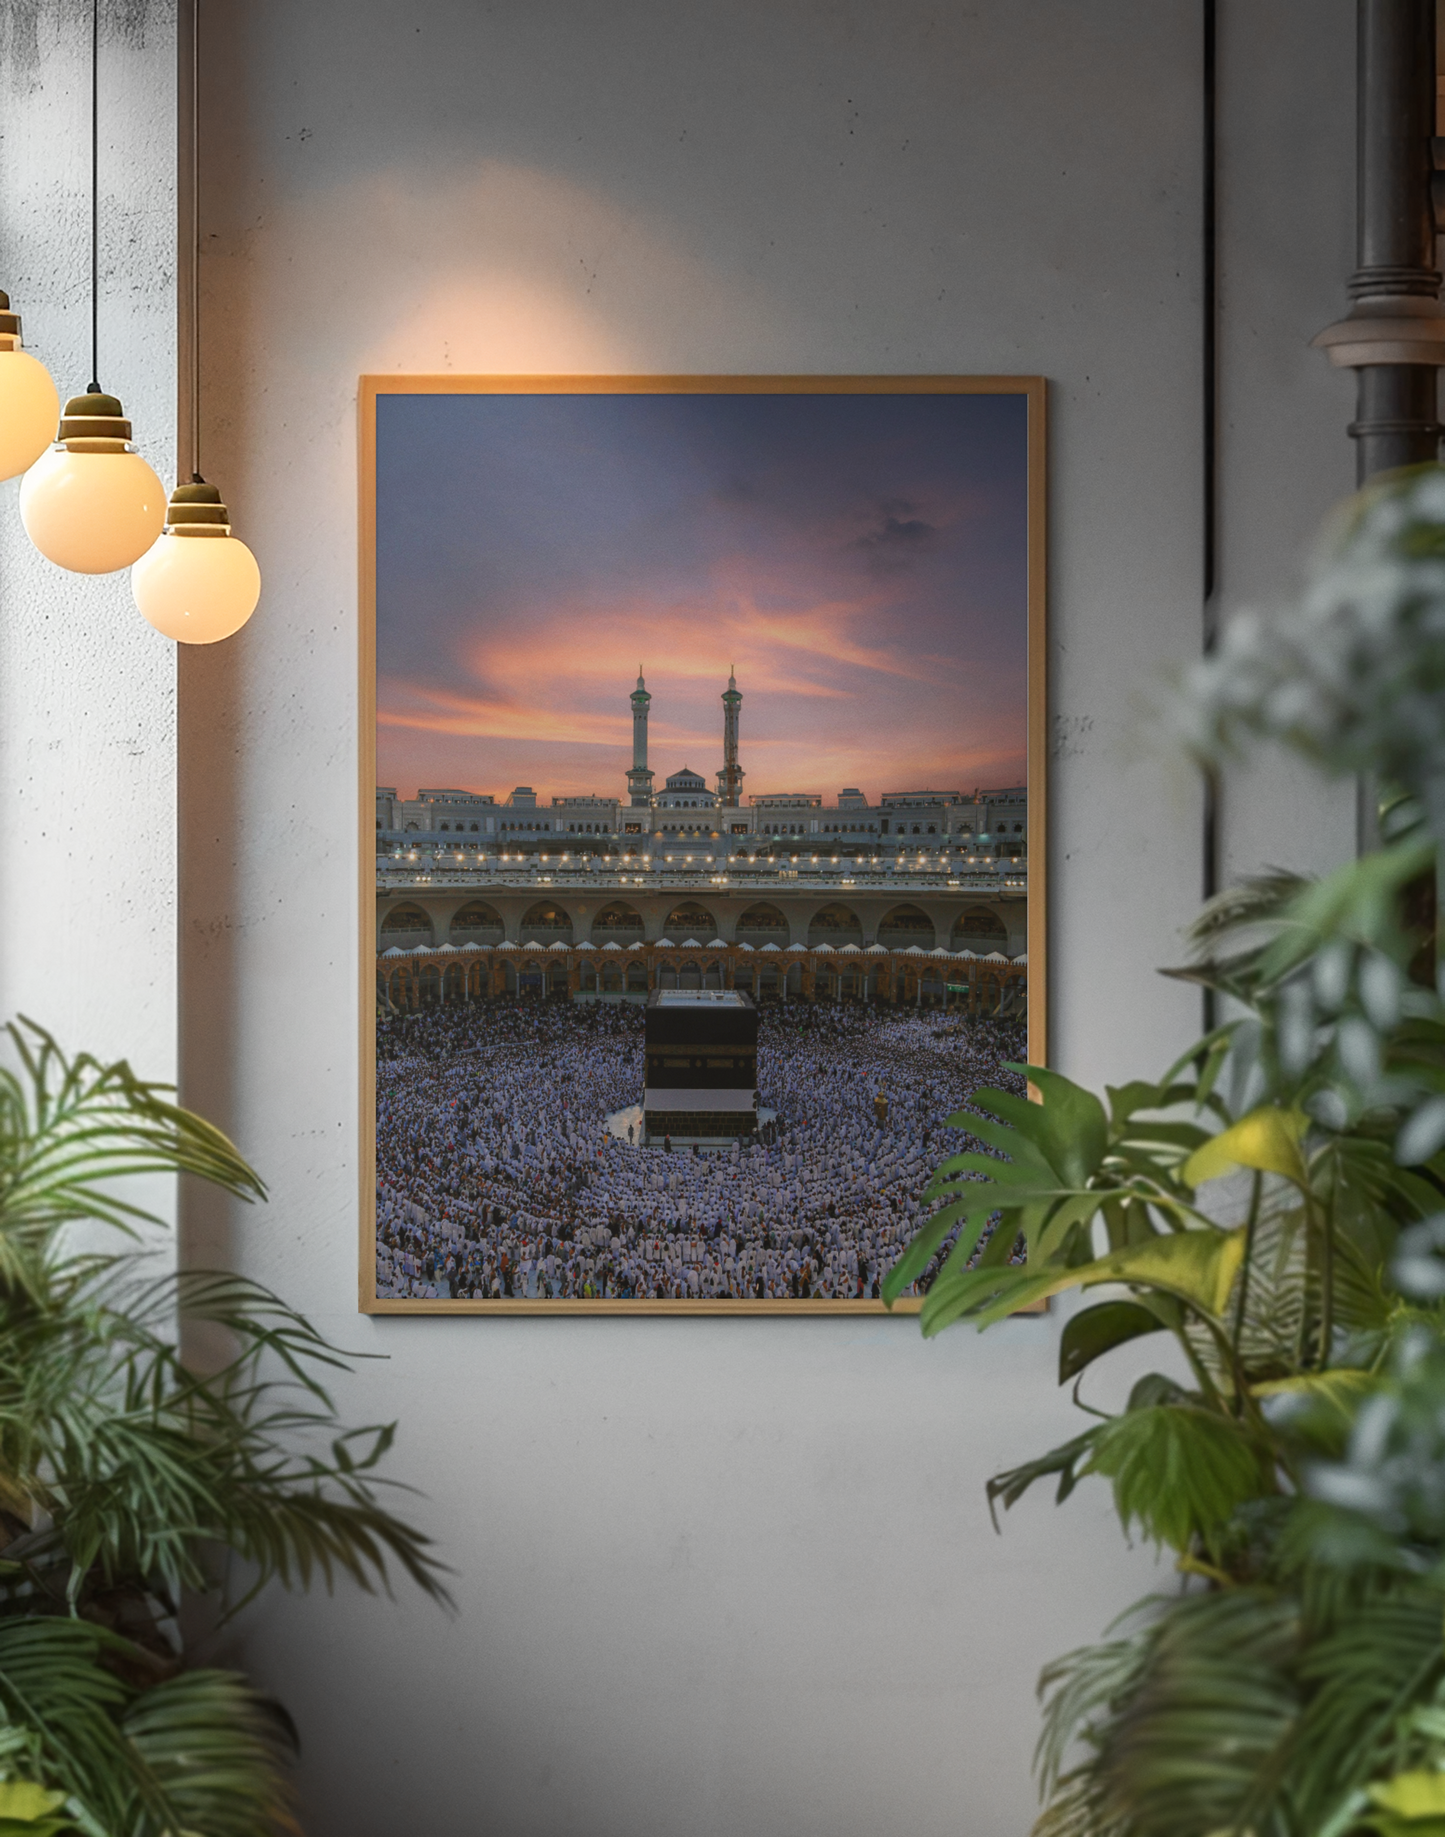 Masjid Al Haram Mecca Sunset [11x17” Poster]